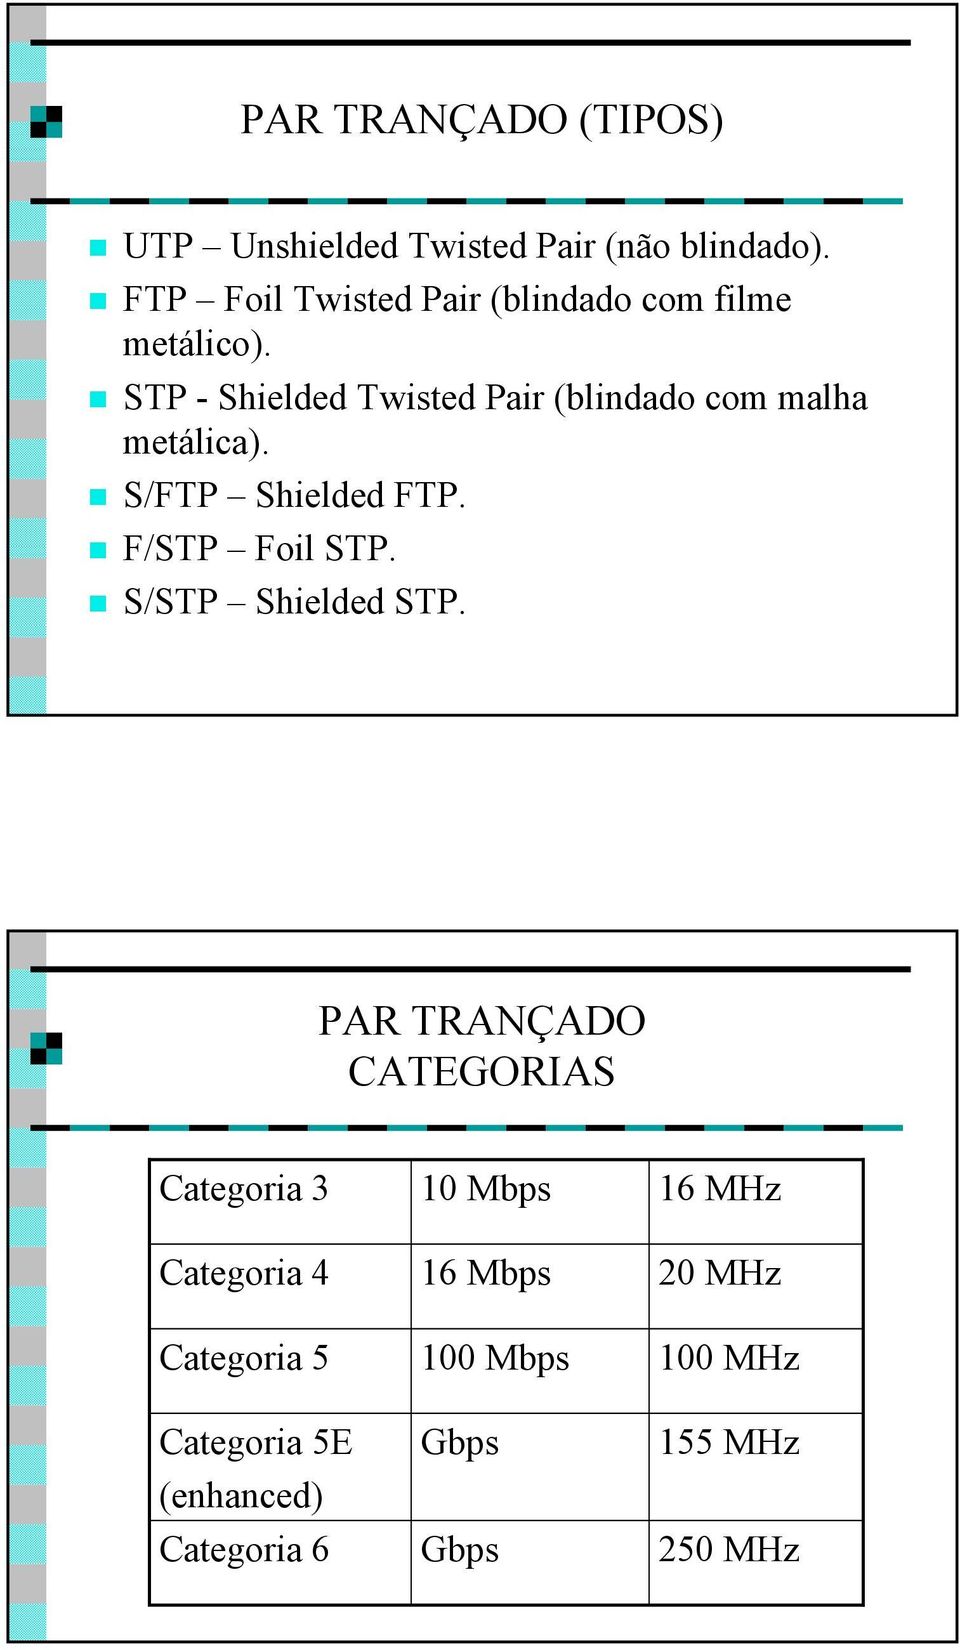 STP - Shielded Twisted Pair (blindado com malha metálica). S/FTP Shielded FTP. F/STP Foil STP.